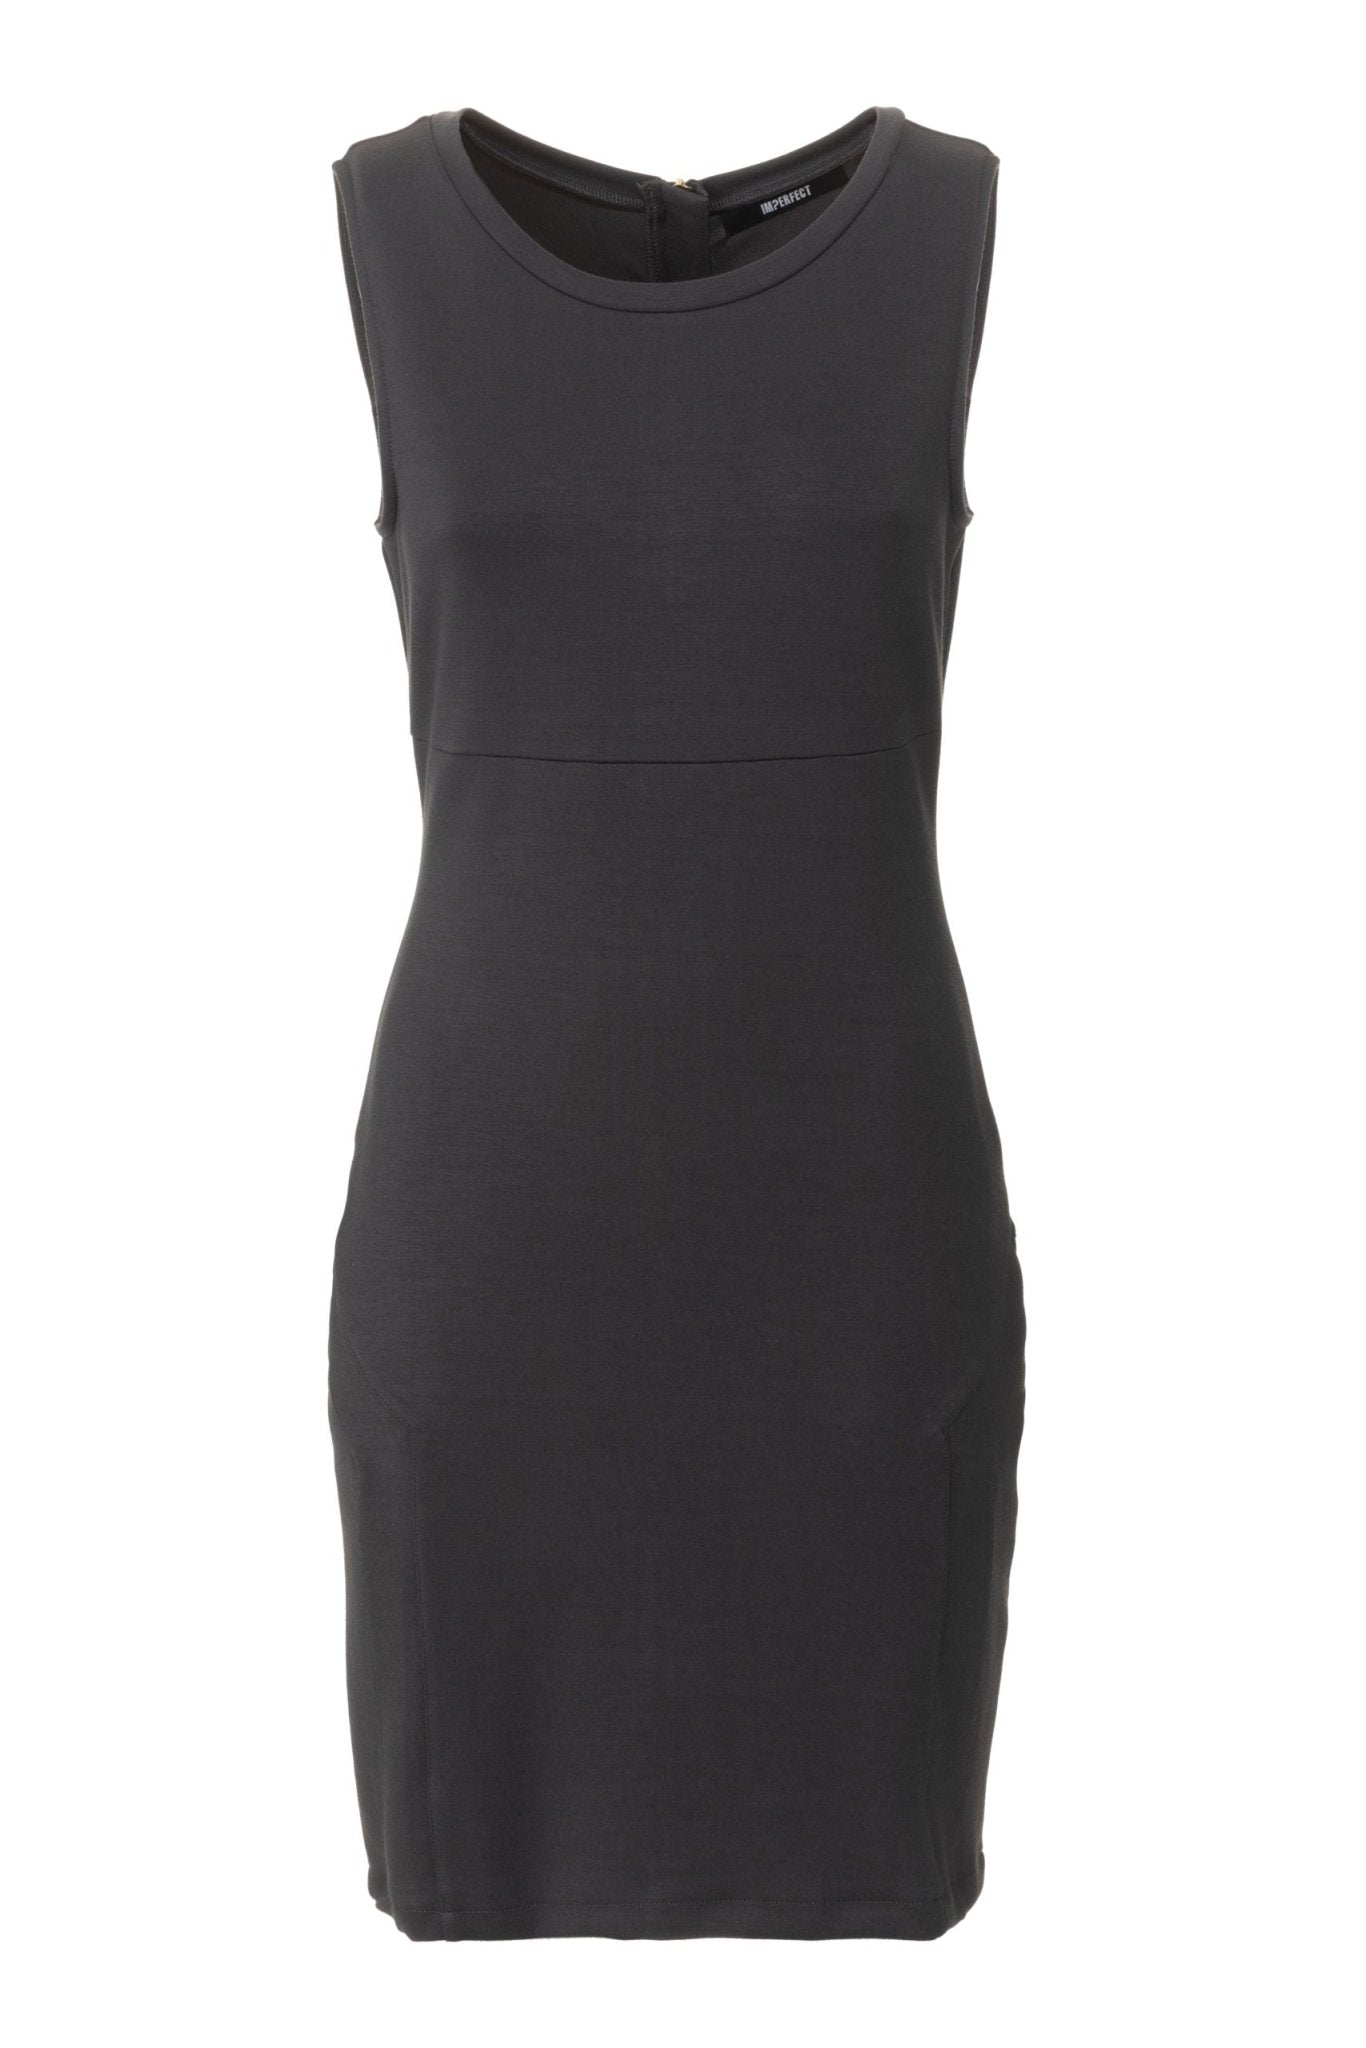 Imperfect Black Polyester Dress - Fizigo